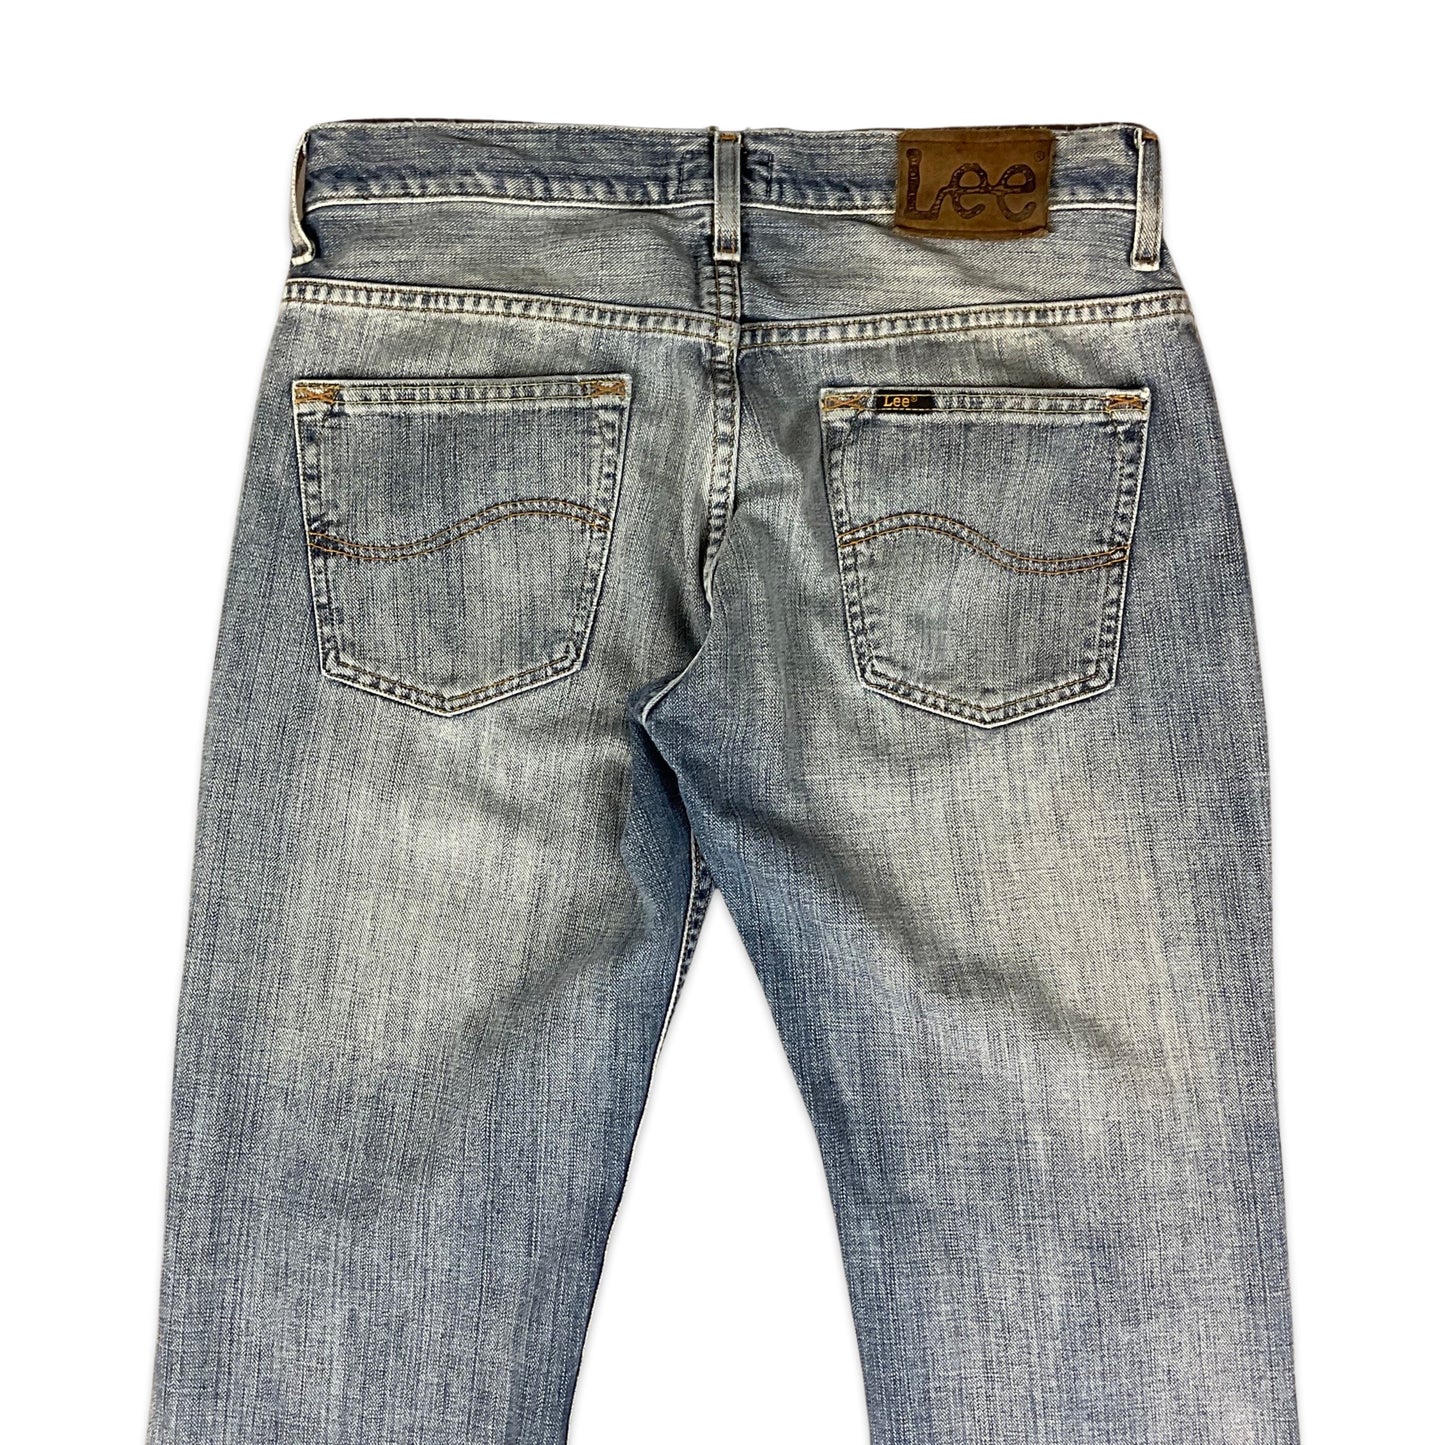 Vintage Lee Straight Leg Light Stonewash Jeans 34W 34L